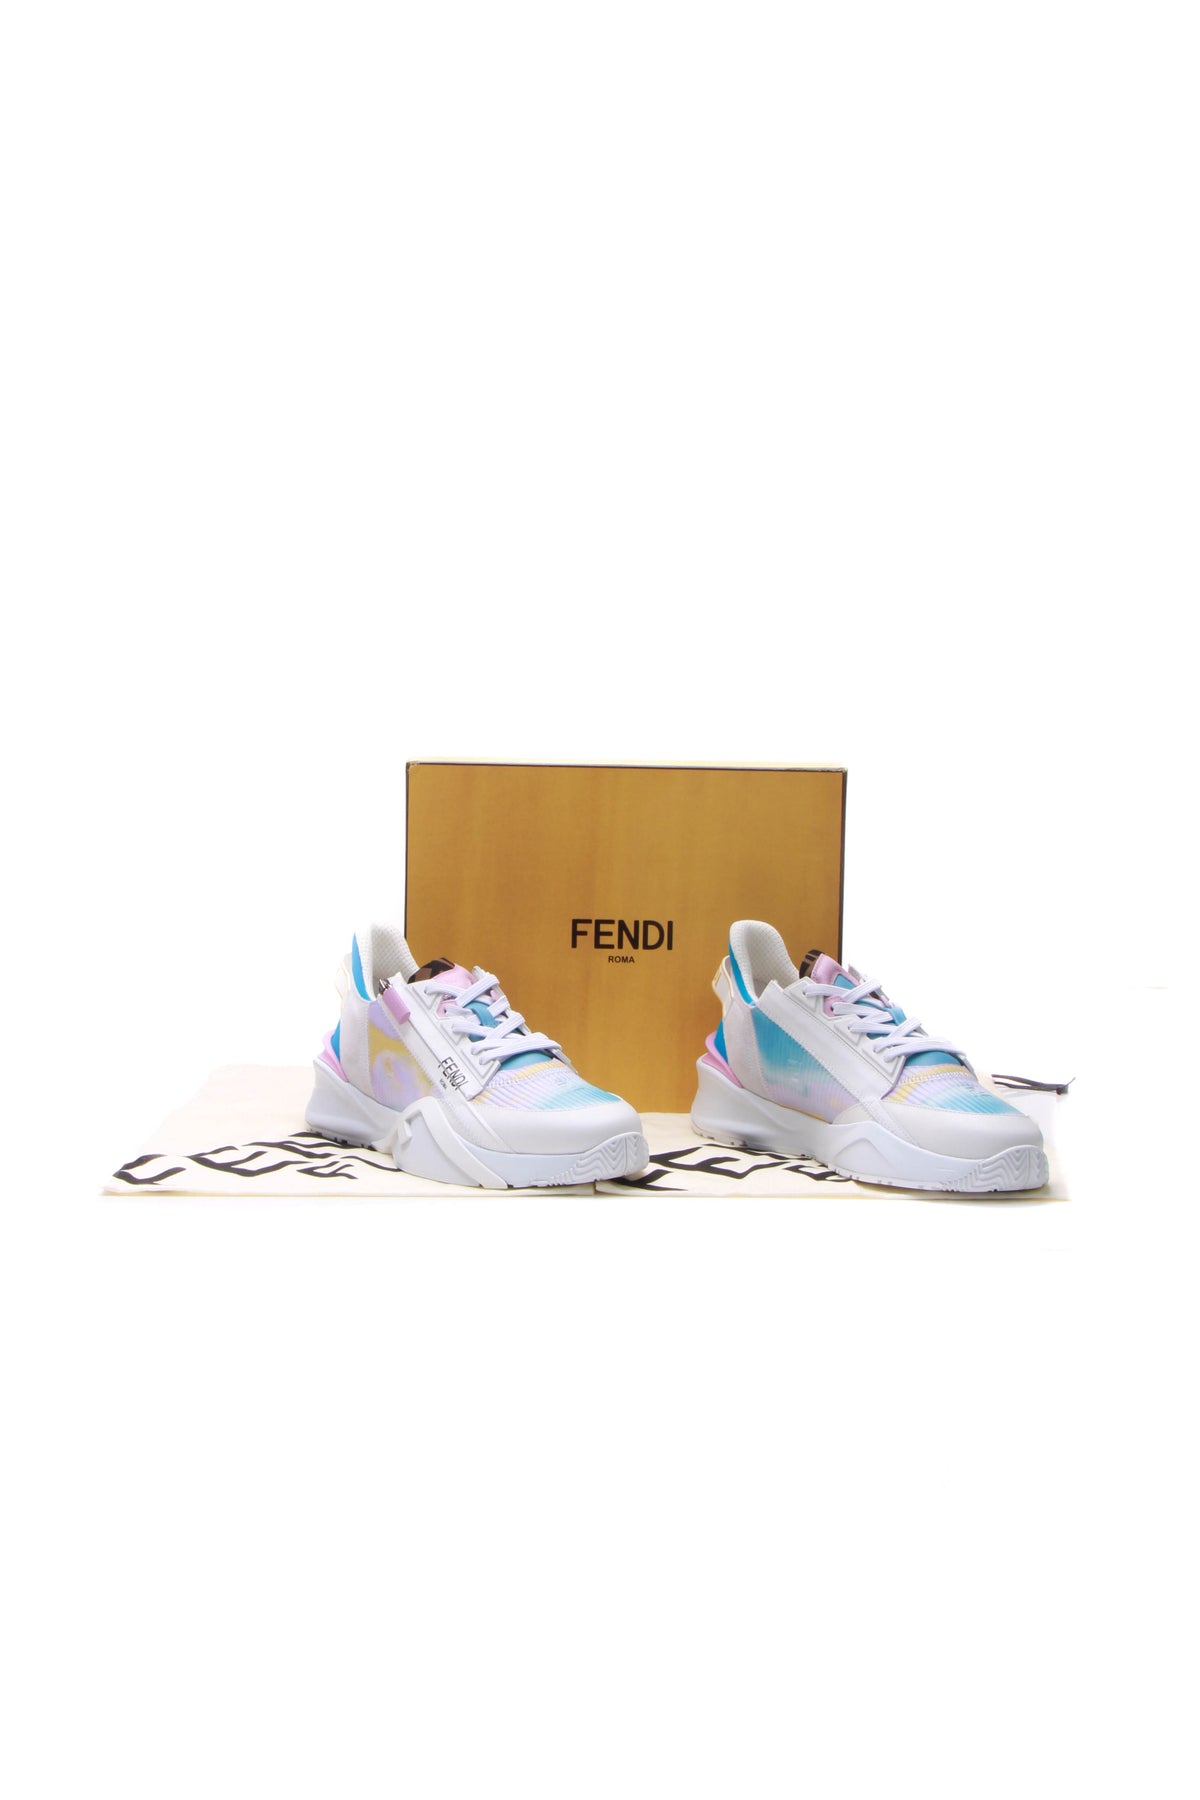 Fendi White and Navy Fendi Mania Sock Sneakers Fendi